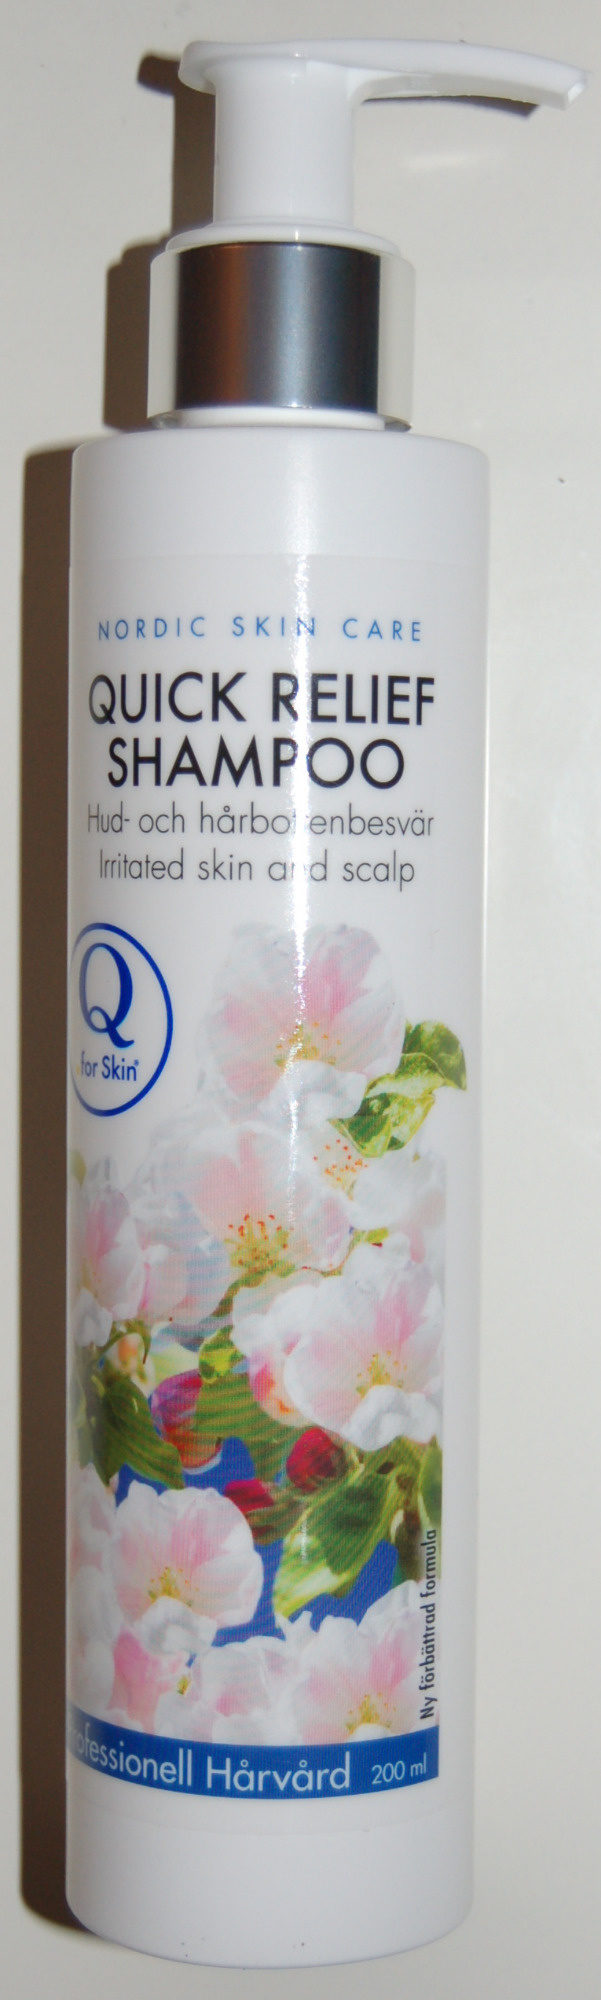 Quick Relief Shampoo - Product - en